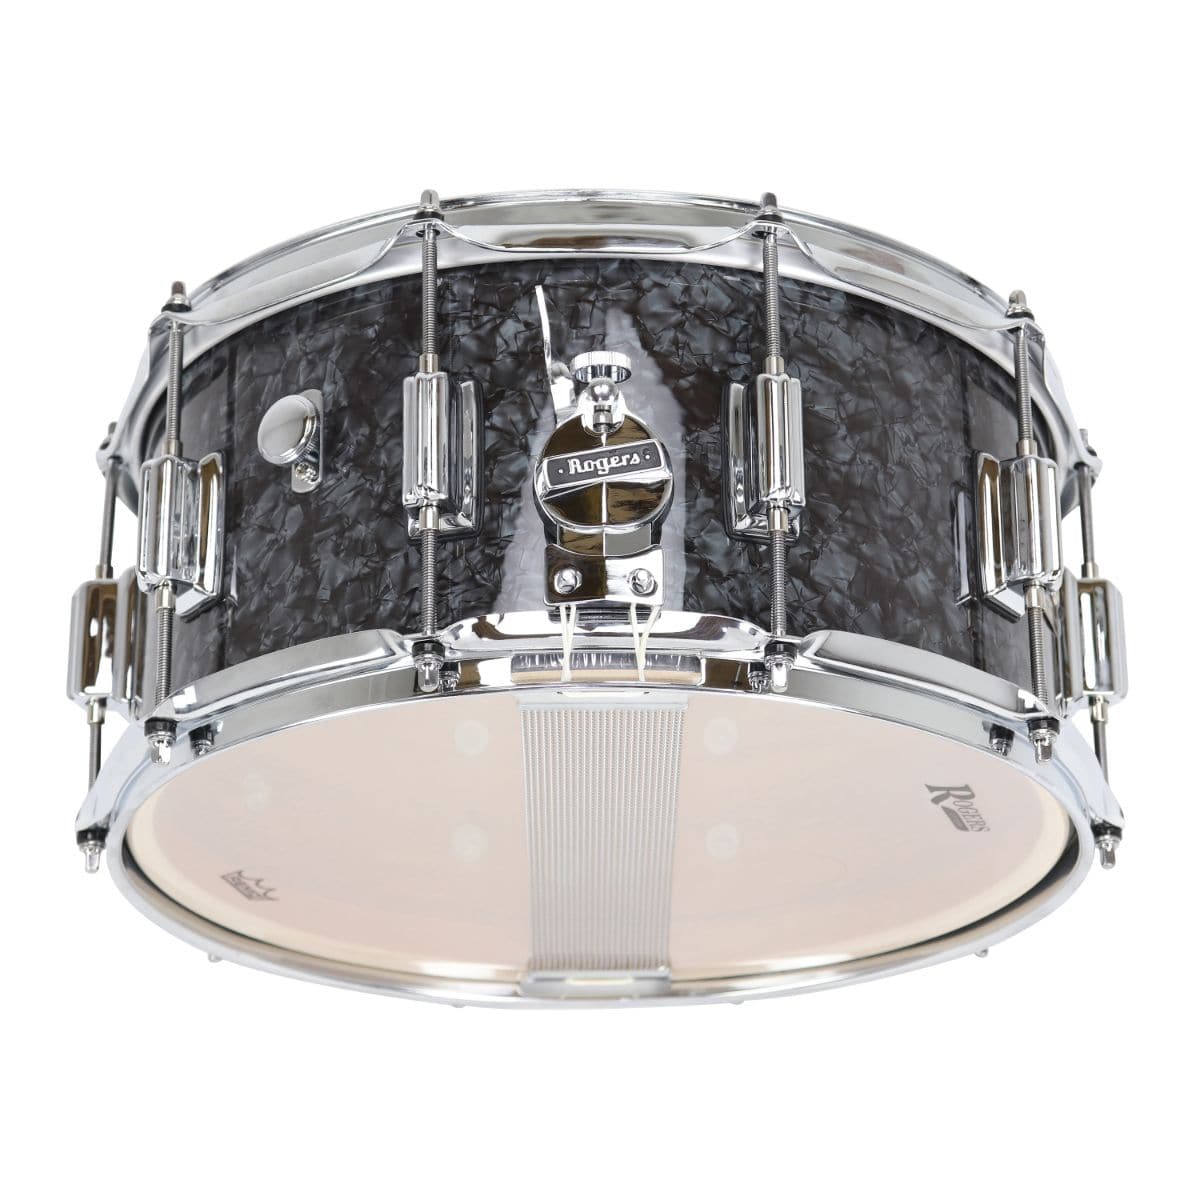 Rogers SuperTen Wood Shell Snare Drum 14x6.5 Black Diamond Pearl